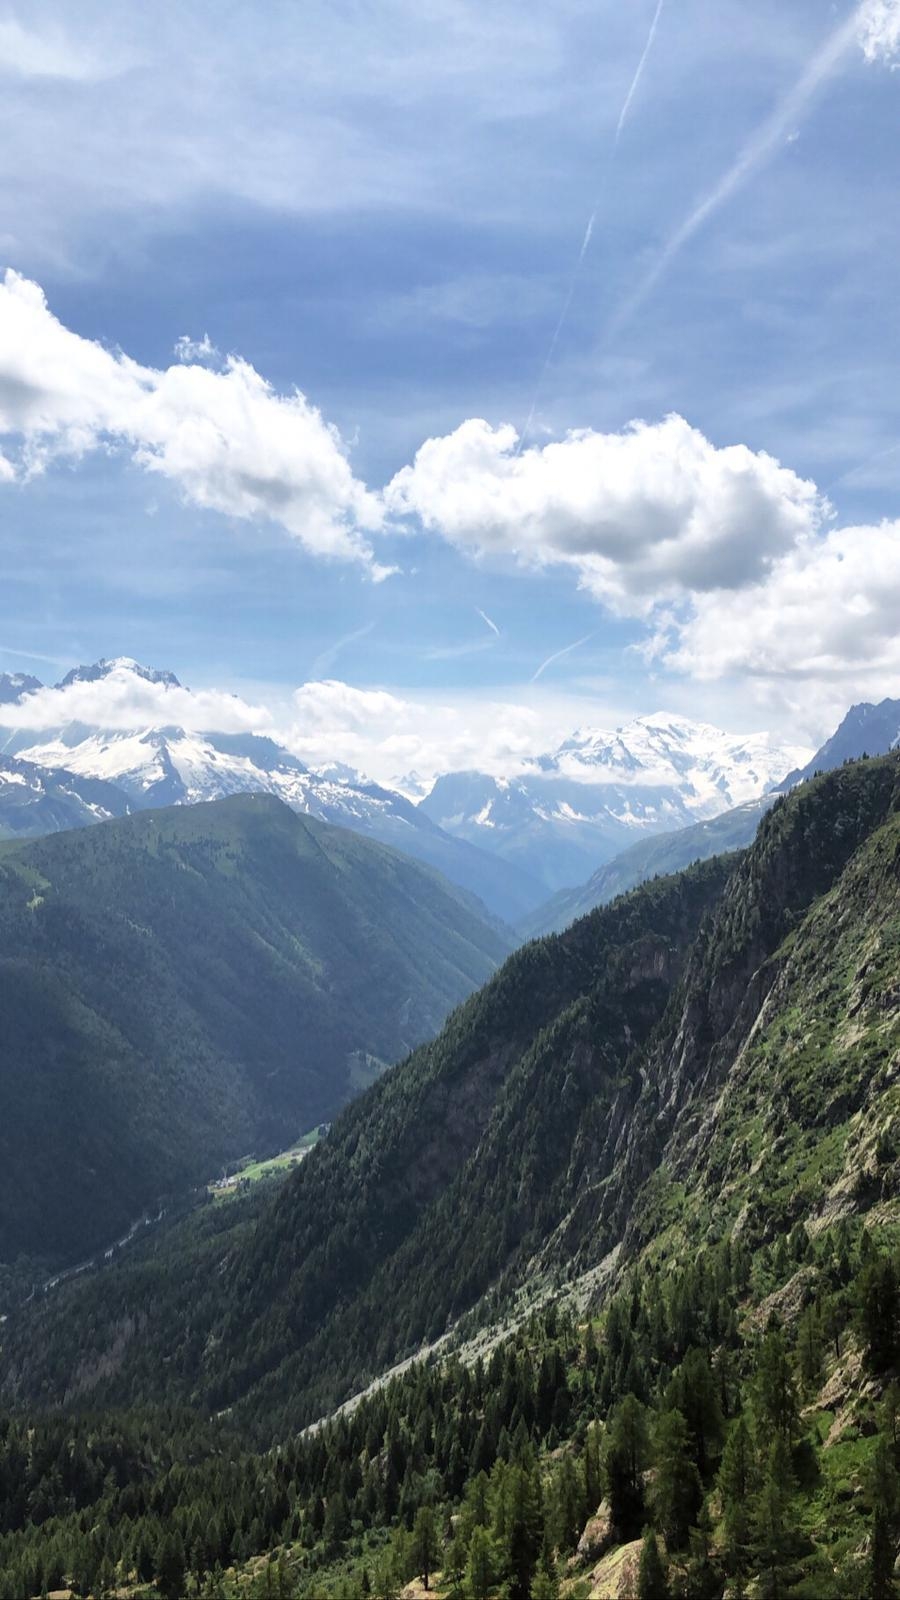 Sonnig warme Grüße aus den Bergen ⛰️🏔️☀️
#wandern #Zillertal #natur #outdoor #sommer #naturliebe 